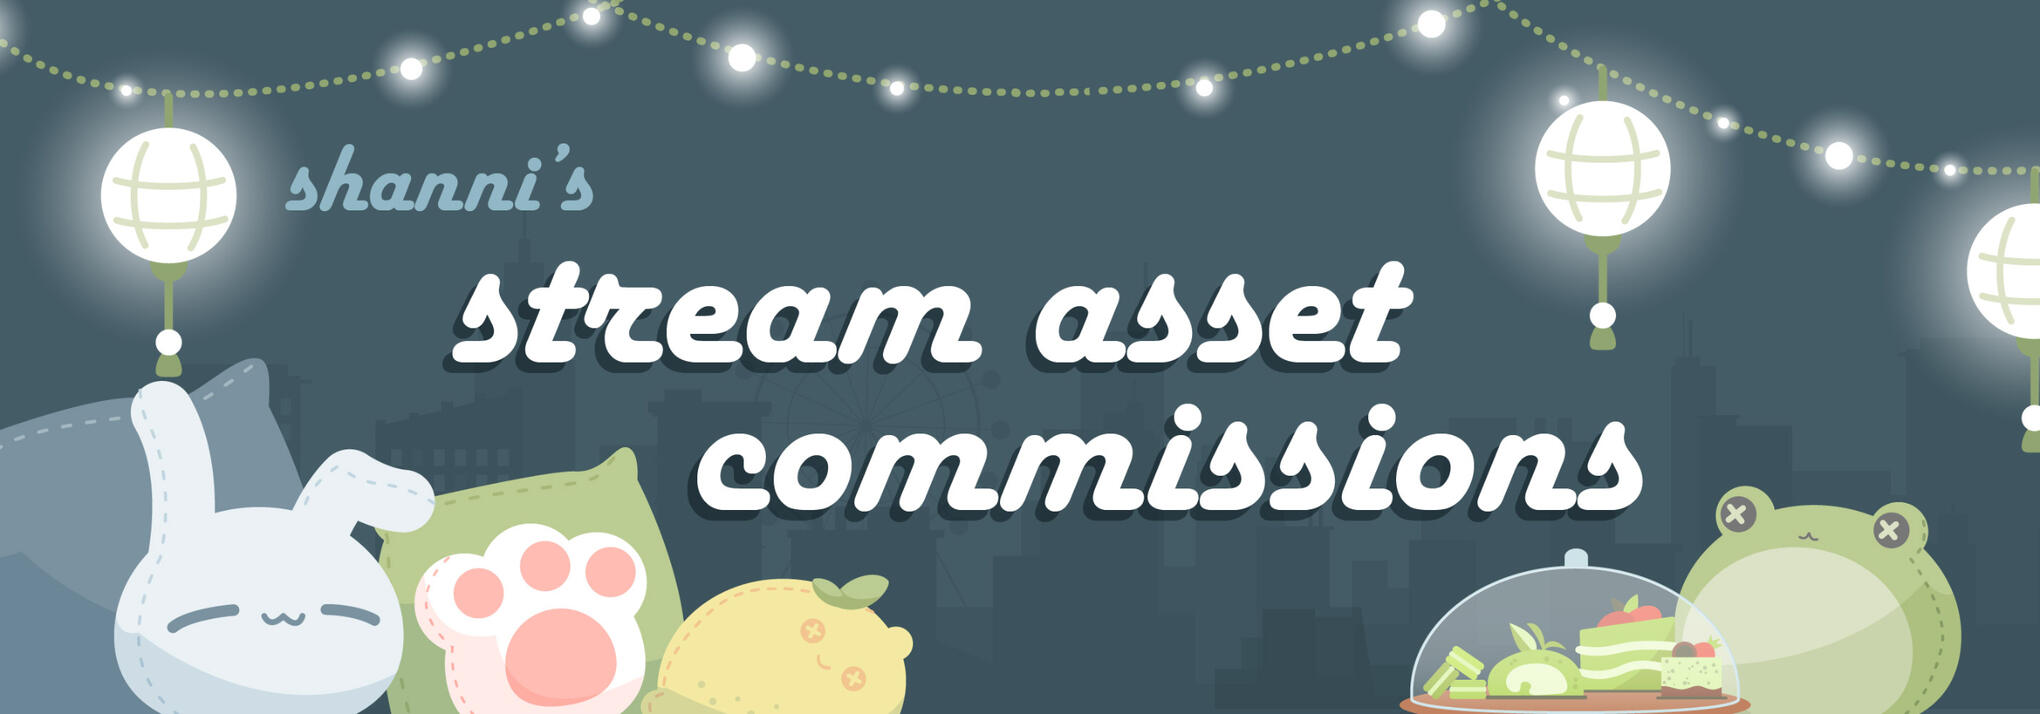 Shanni's stream asset commissions